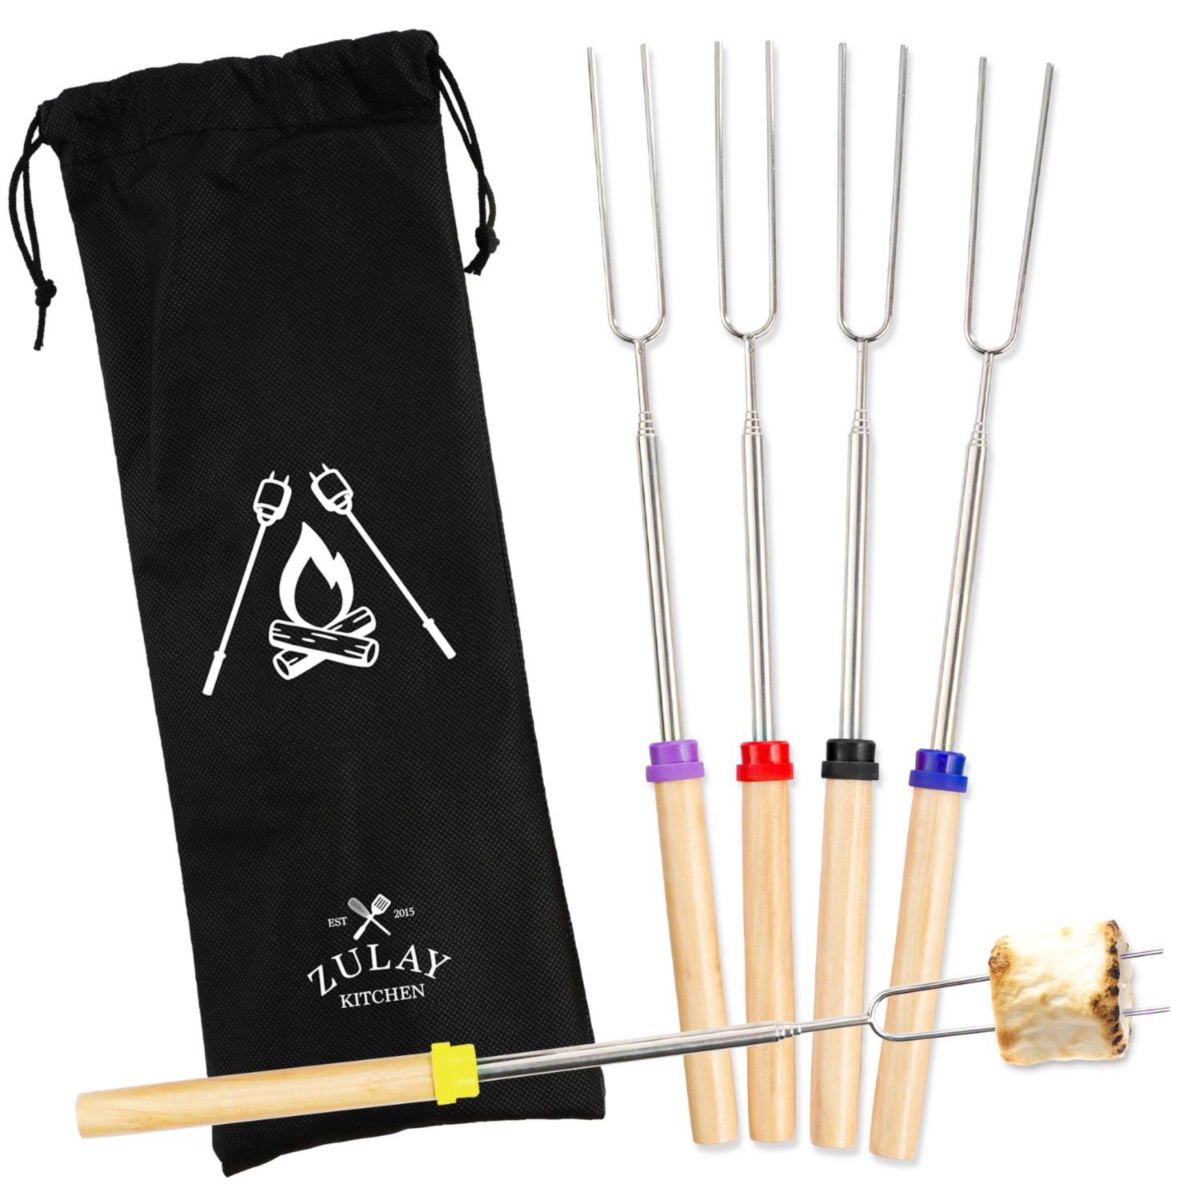 Long Marshmallow Roasting Sticks Extendable Design - Pack Assorted